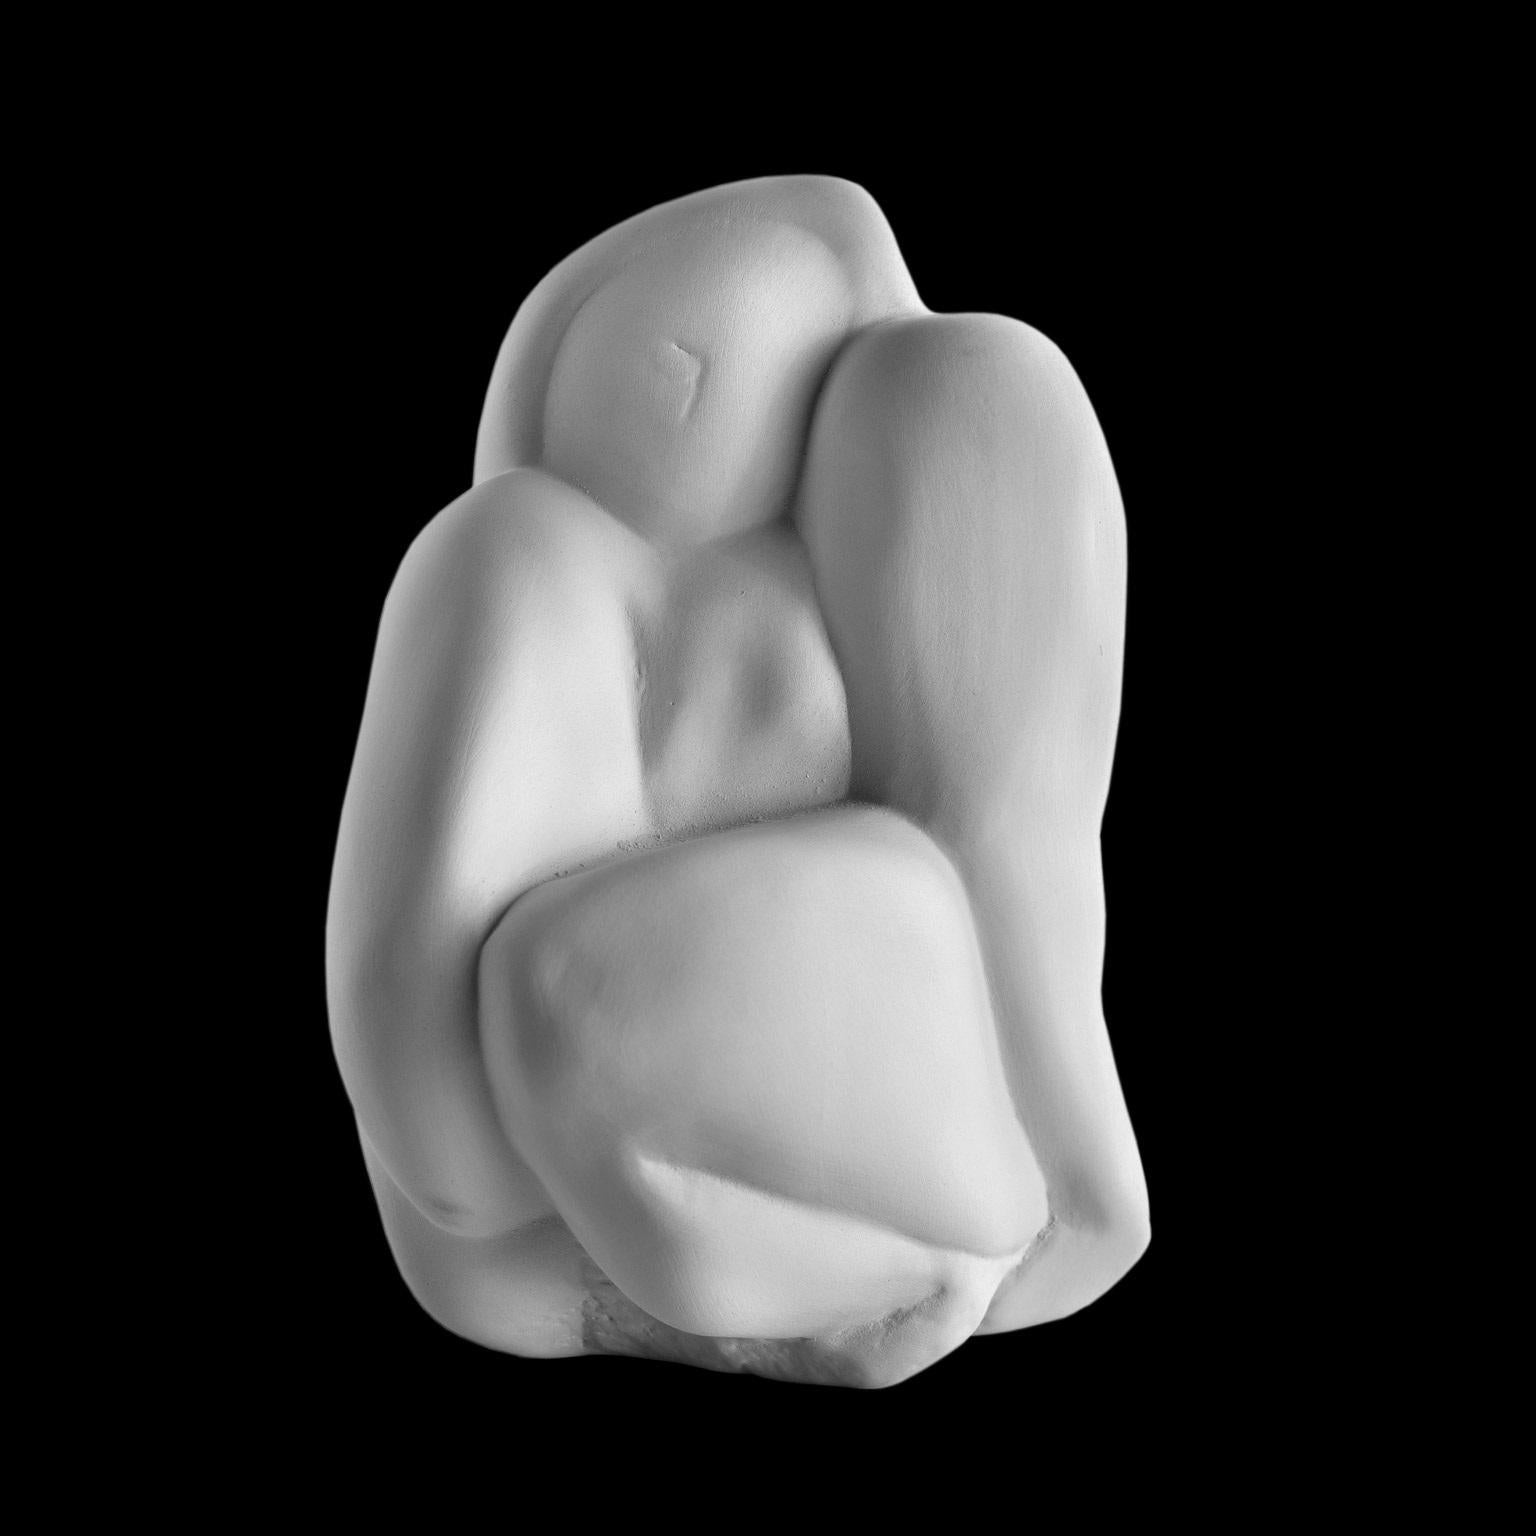 Ceramic sculpture MATER white matte finished

cod. MM001
measures: Height 22.0 cm. - Diameter 15.0 cm.
  